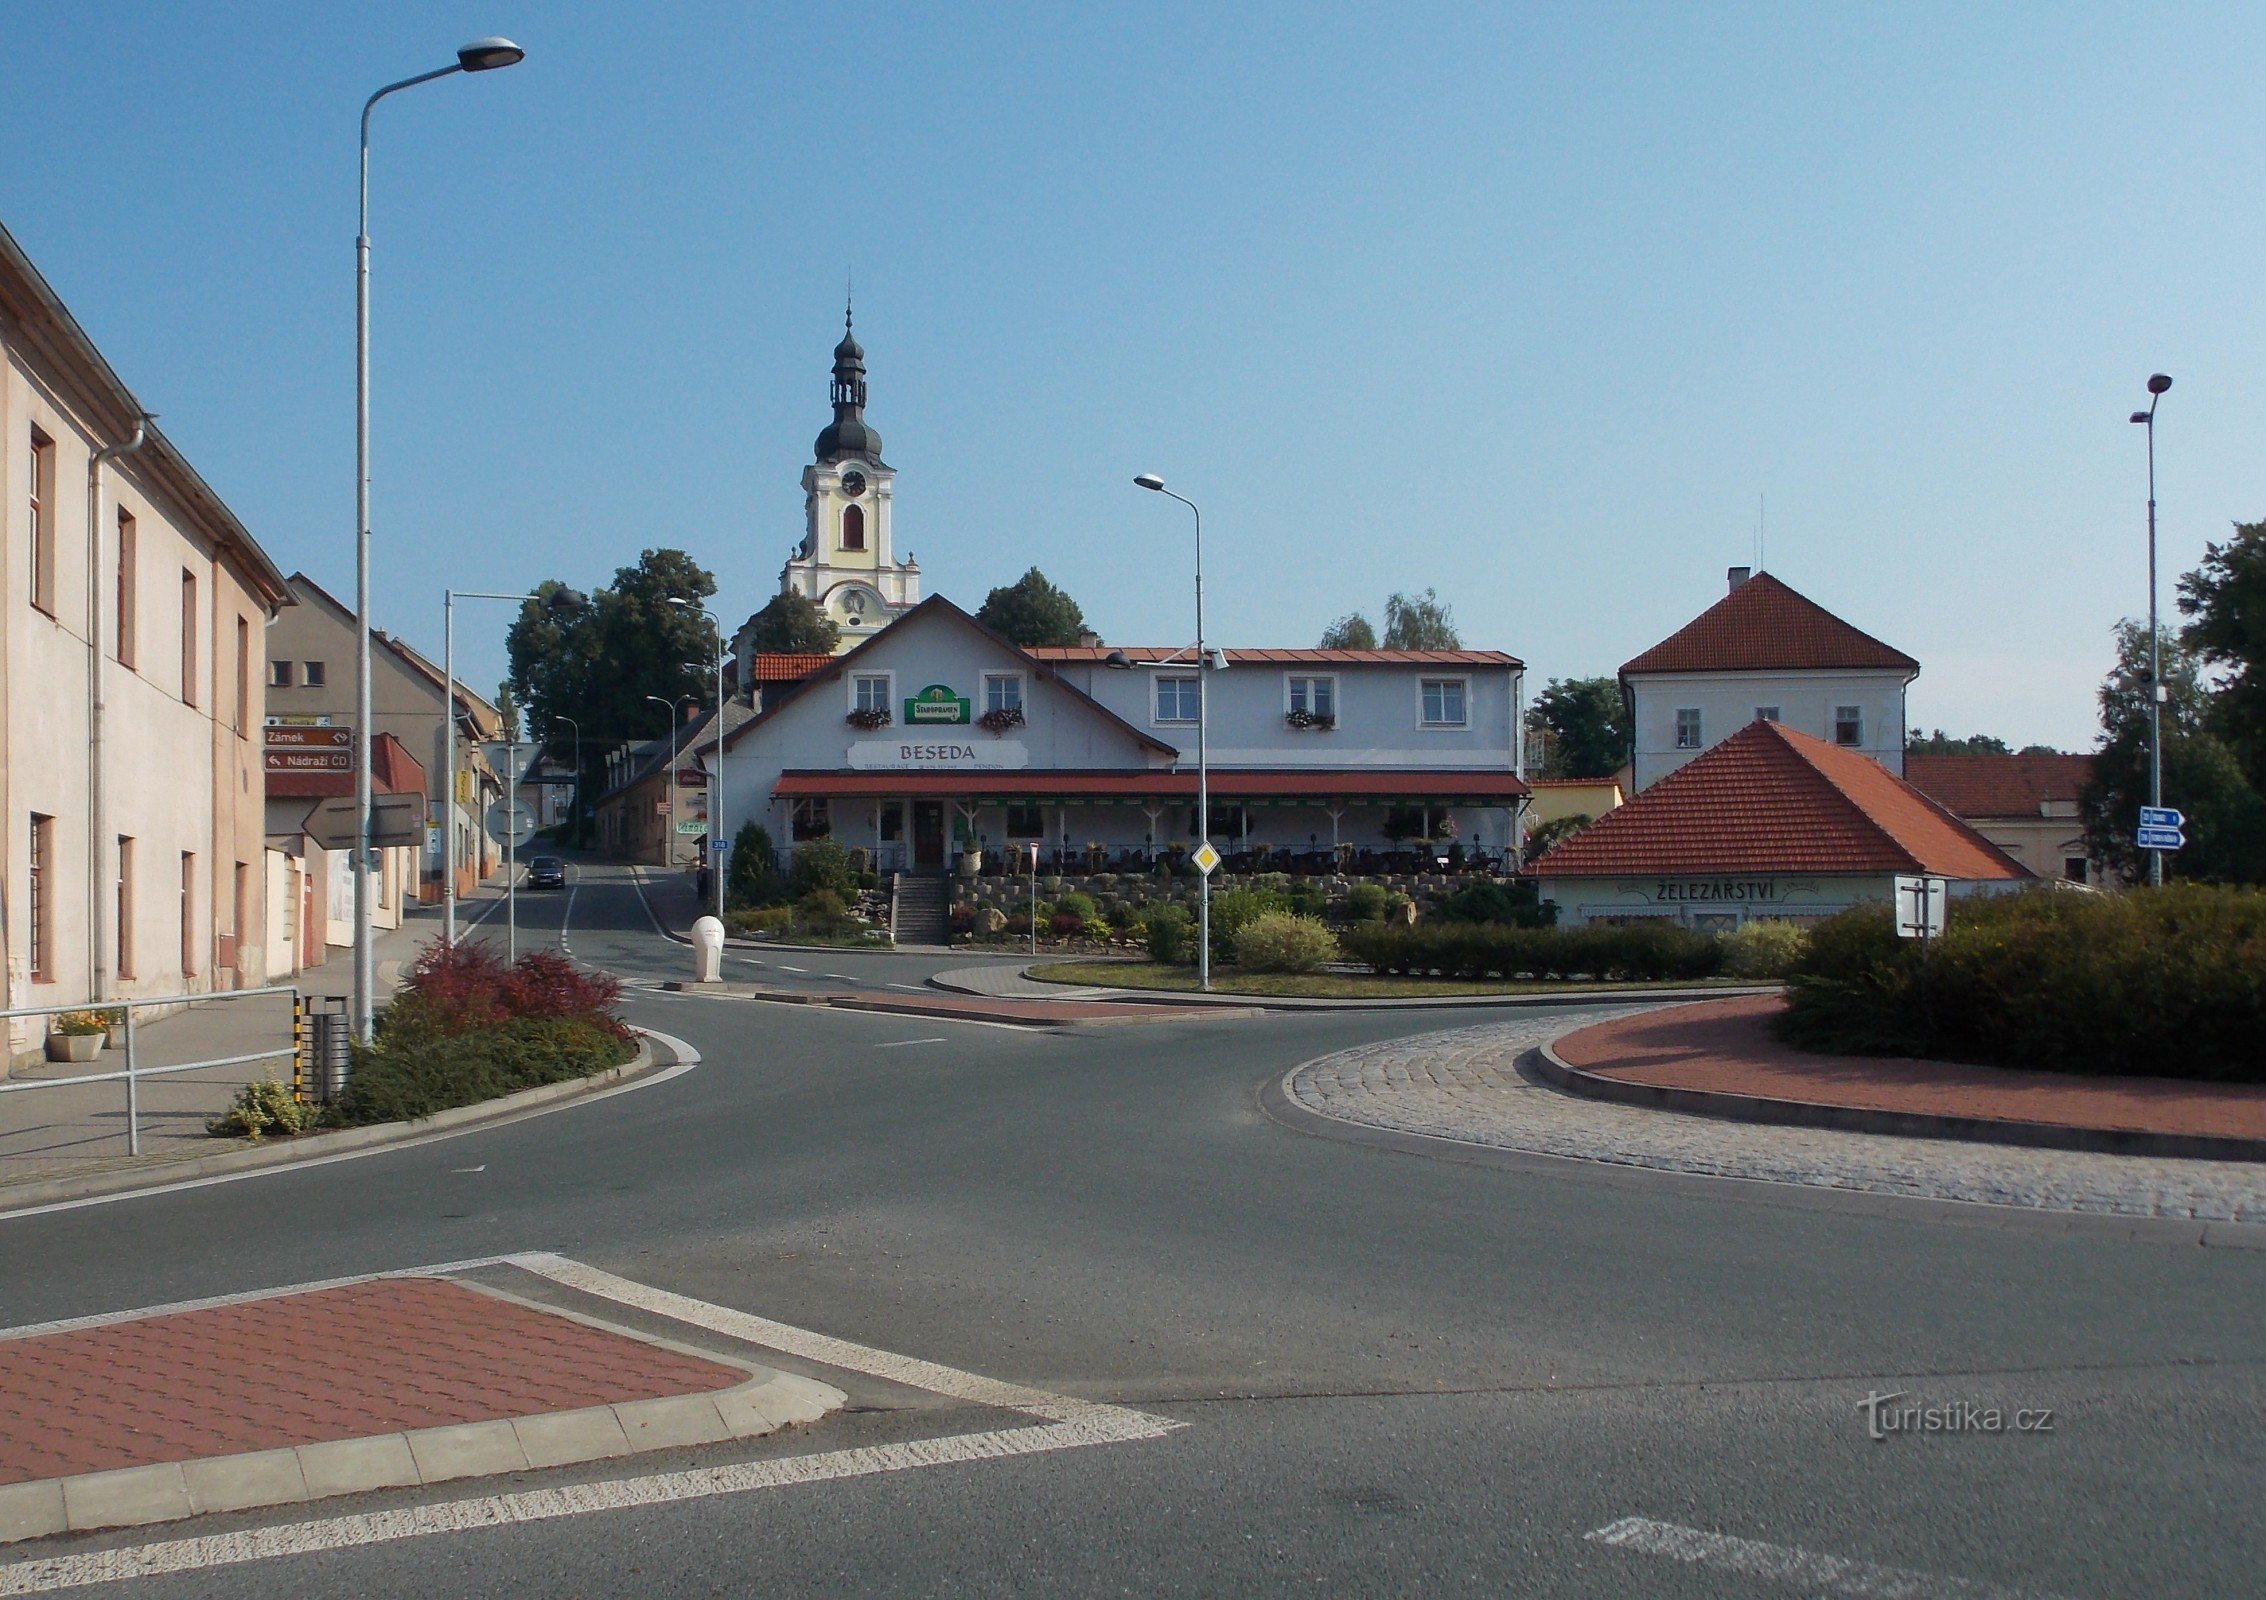 Vers la ville de Častolovice